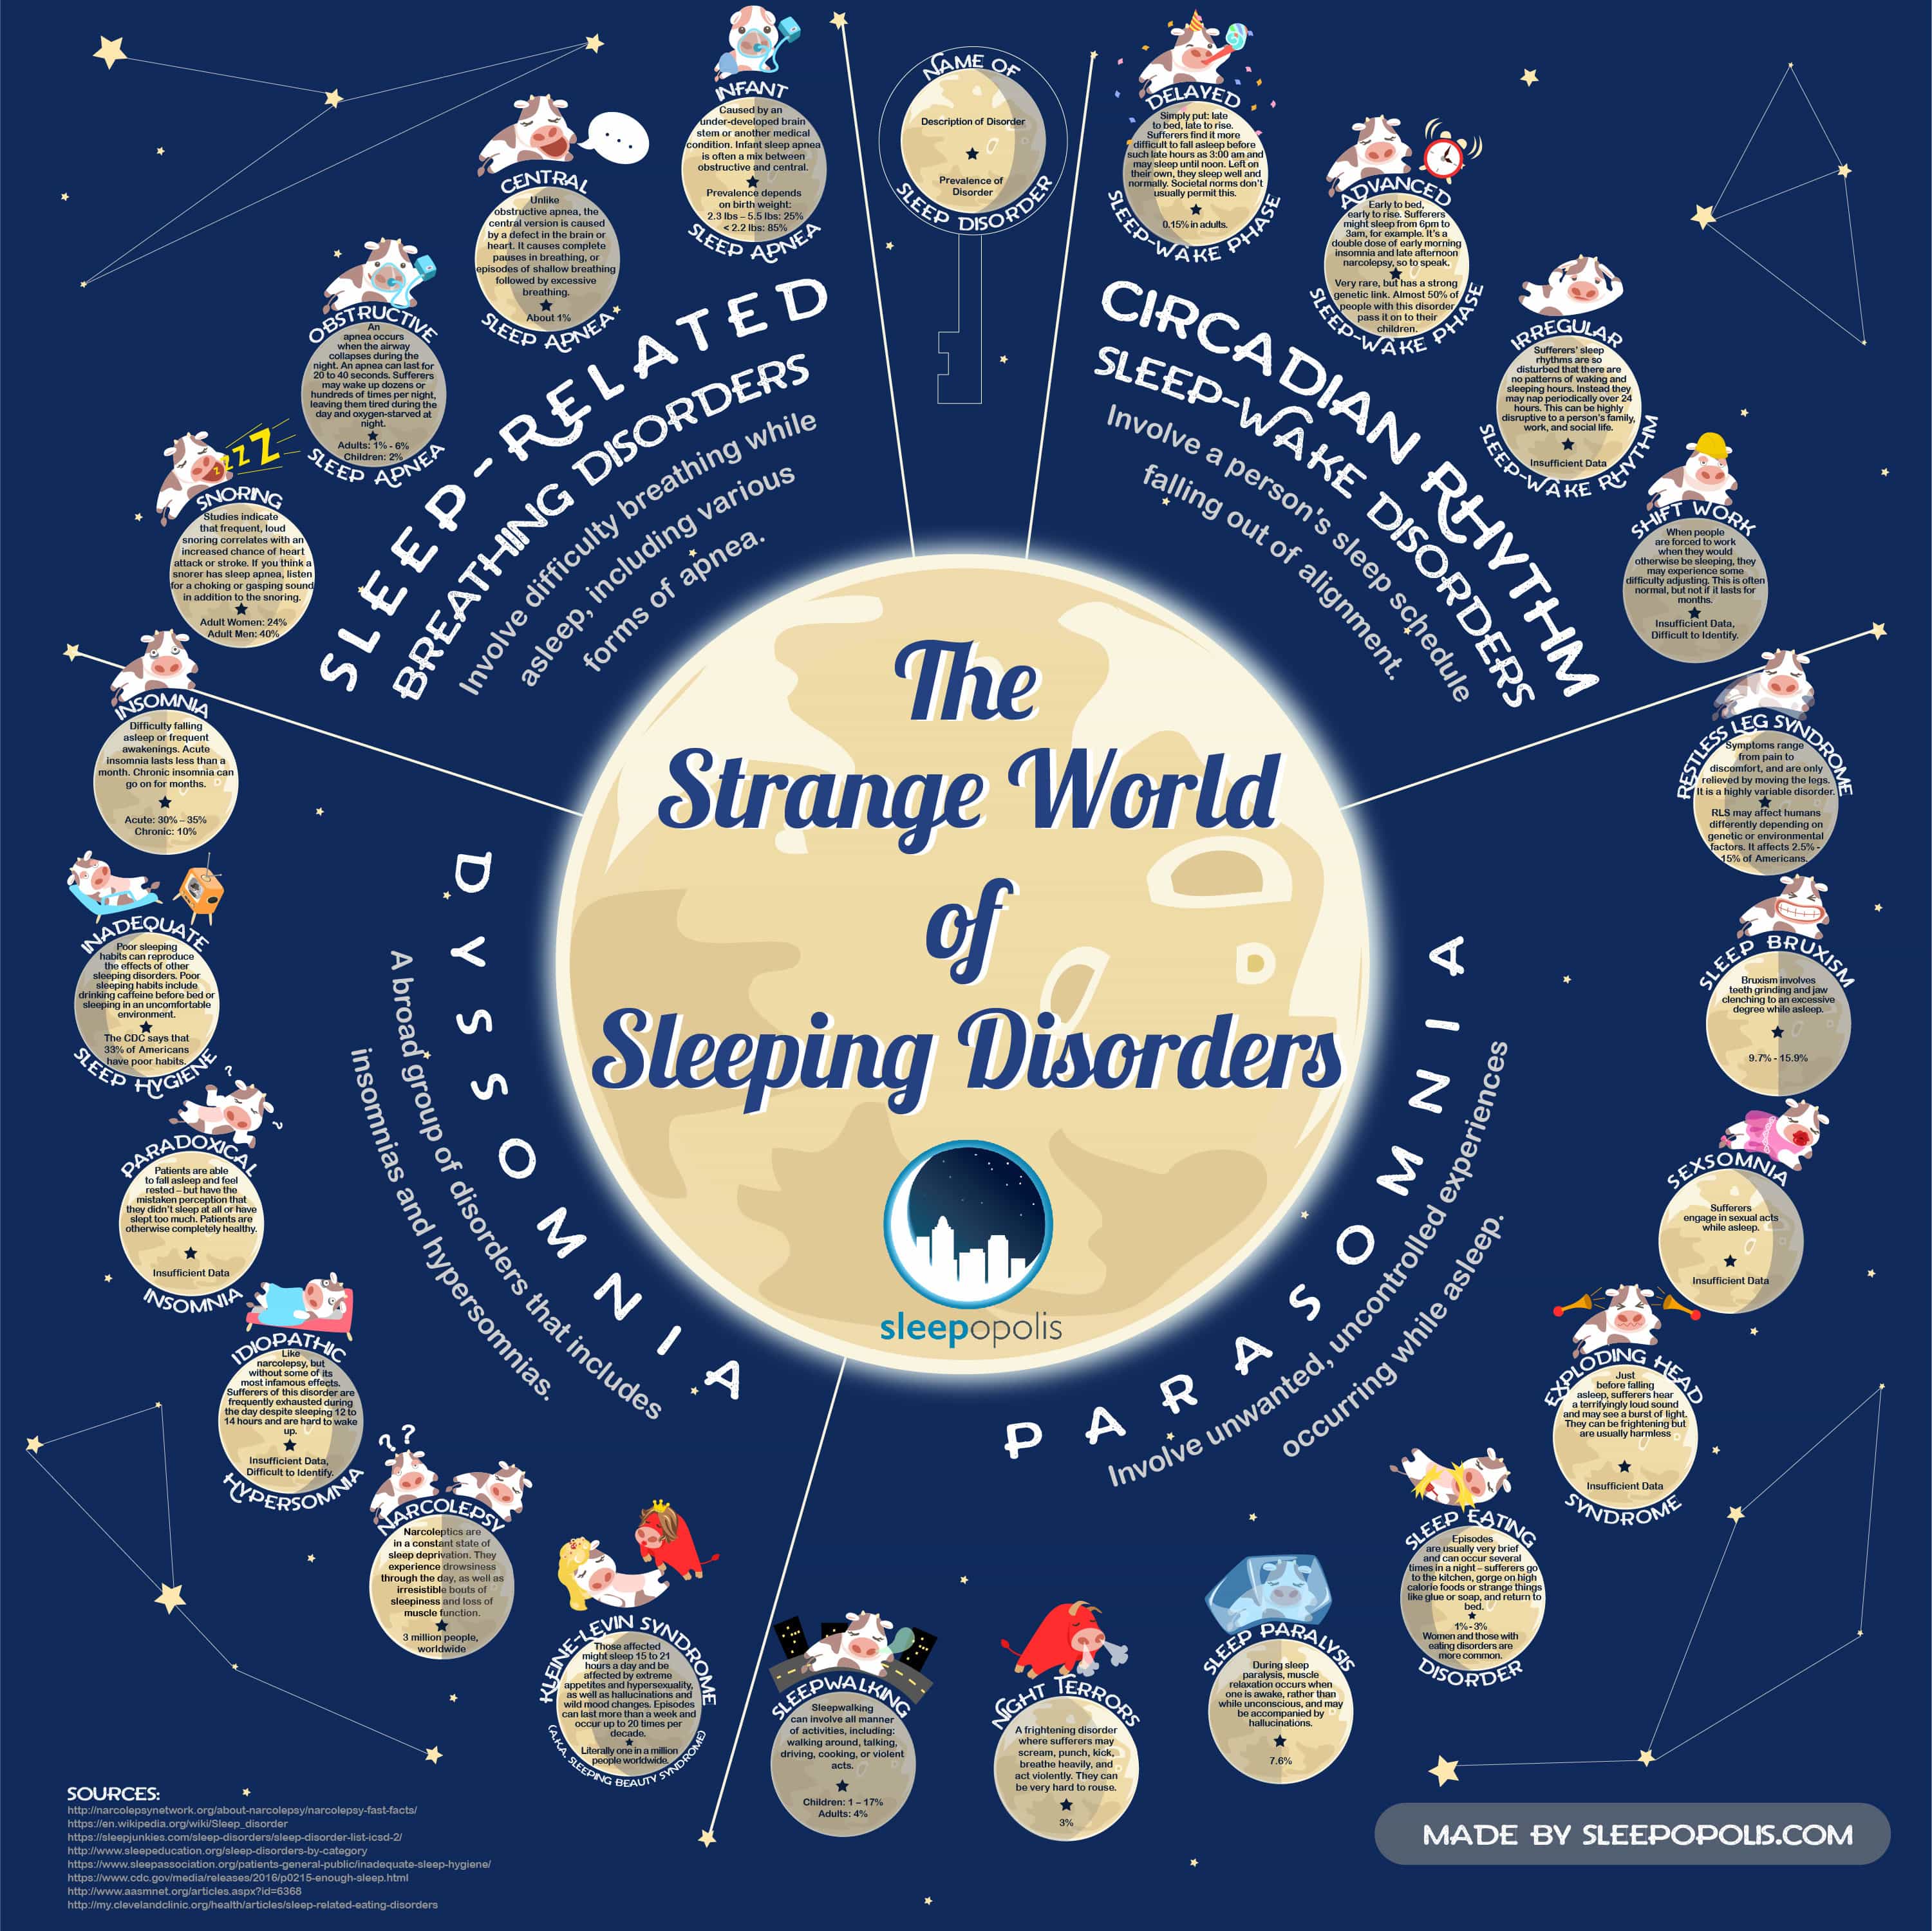 The Strange World of Sleep Disorders